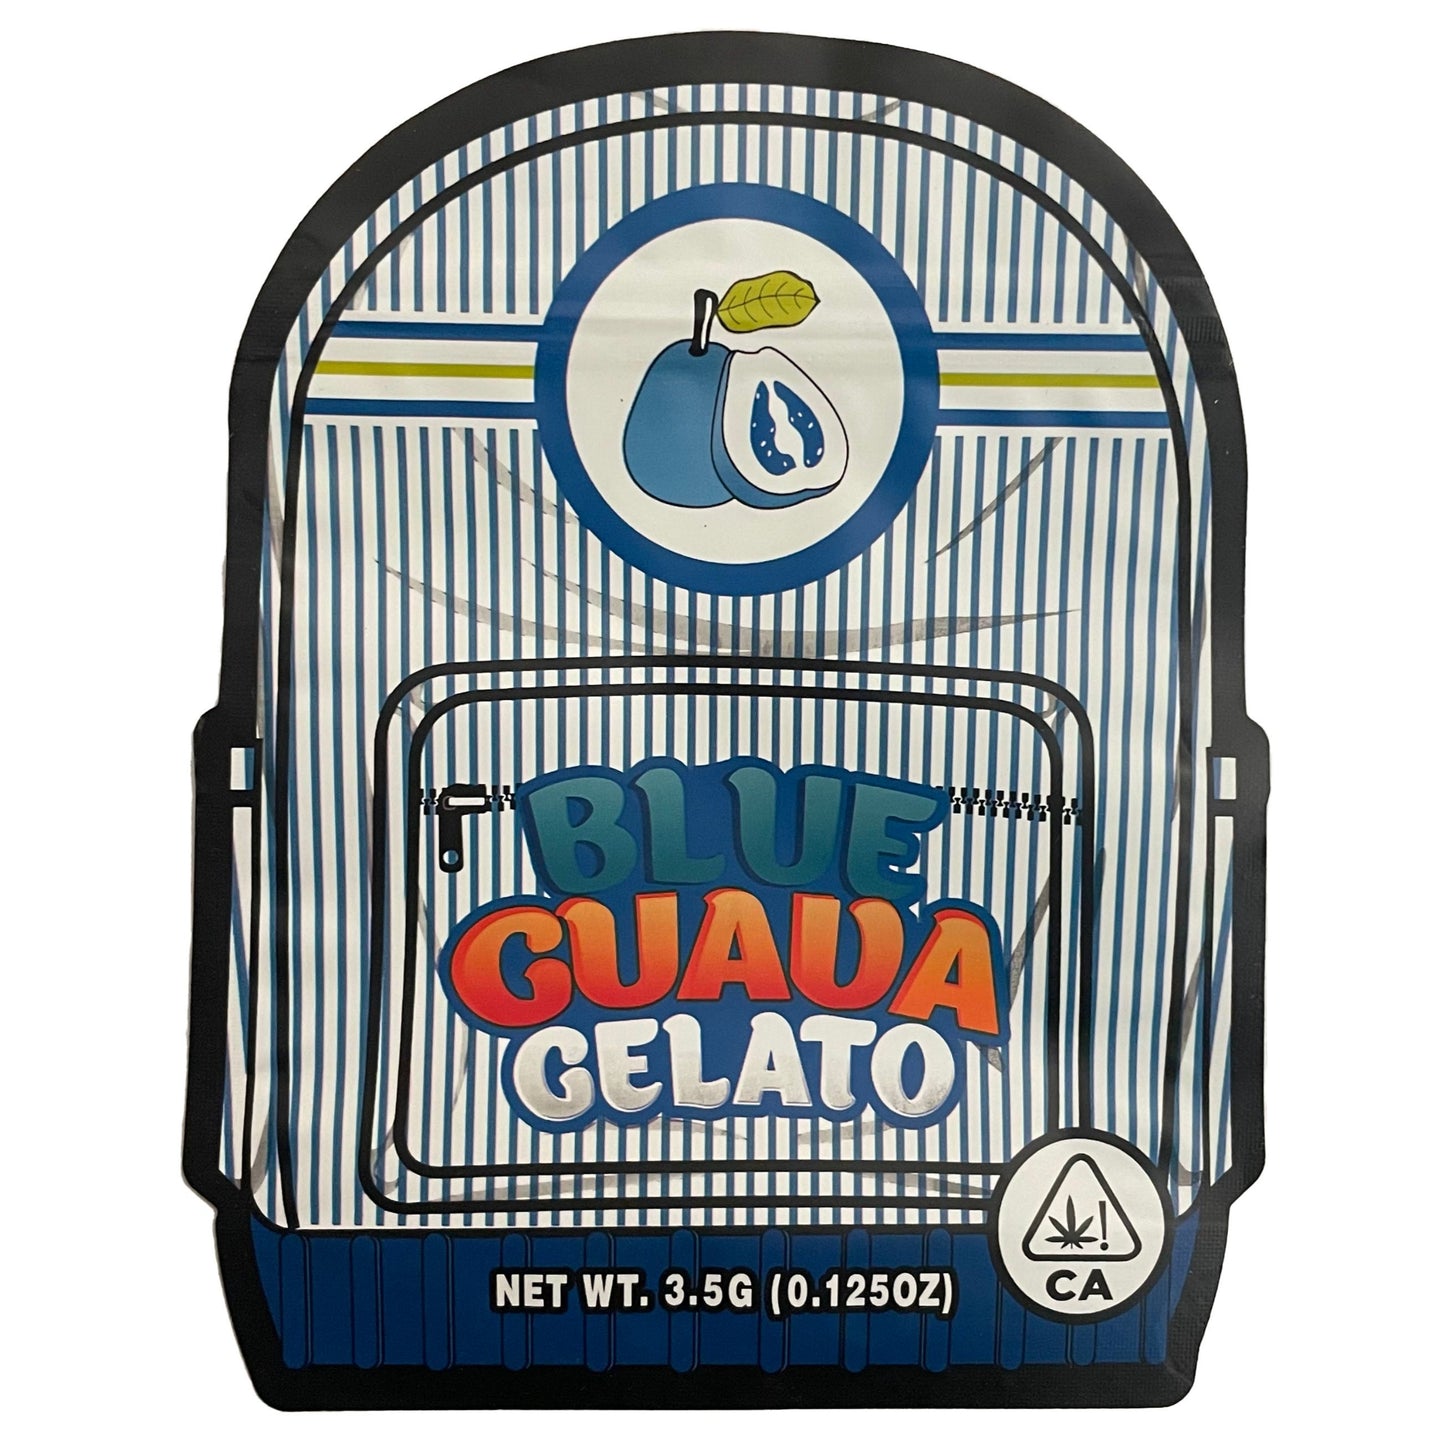 Blue Guava Gelato 3.5G Mylar Bags